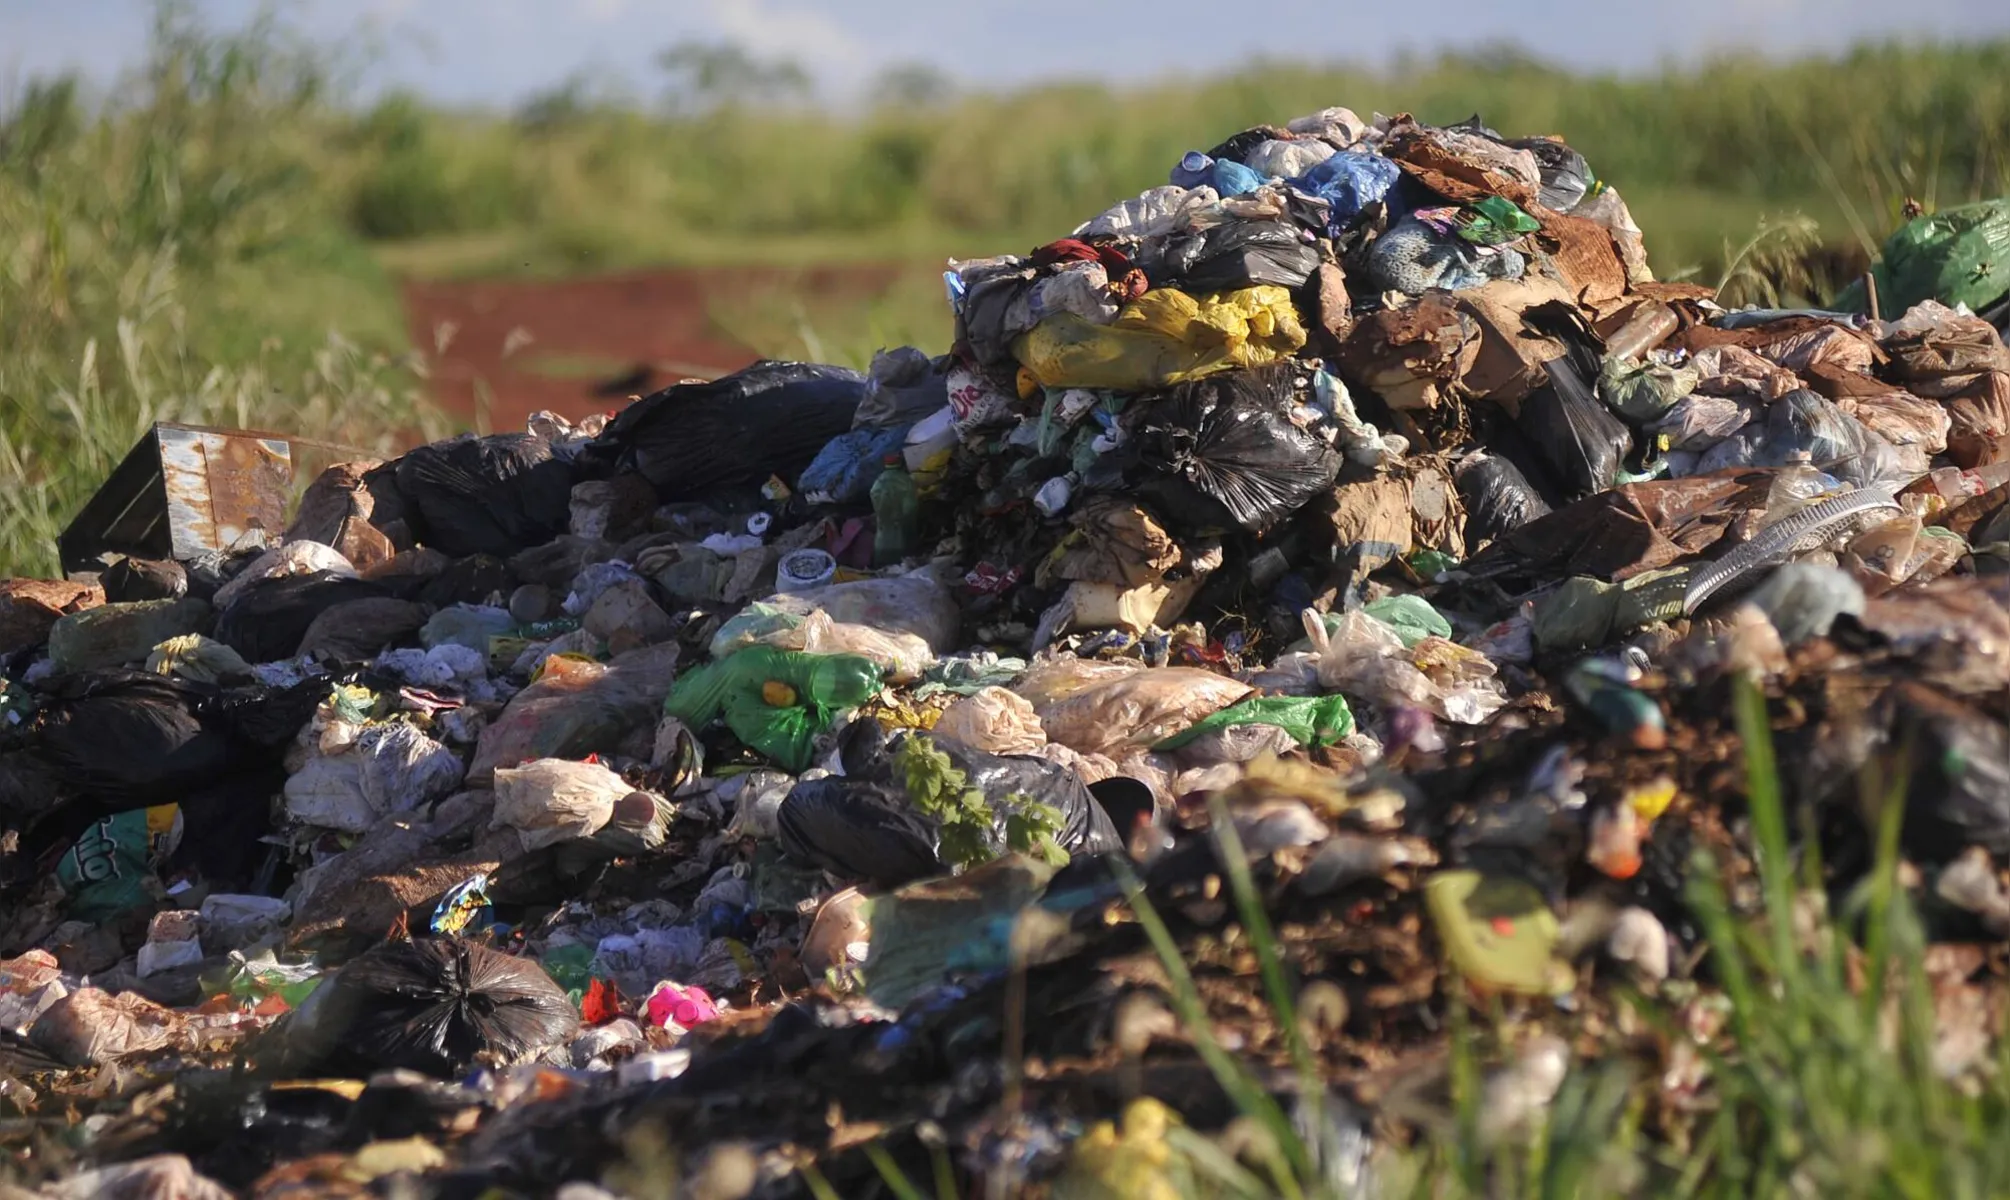 Assembléia Legislativa derrubou veto do governador para permitir que o Paraná receba resíduos sólidos urbanos e resíduos industriais Classes I e II de outros estados